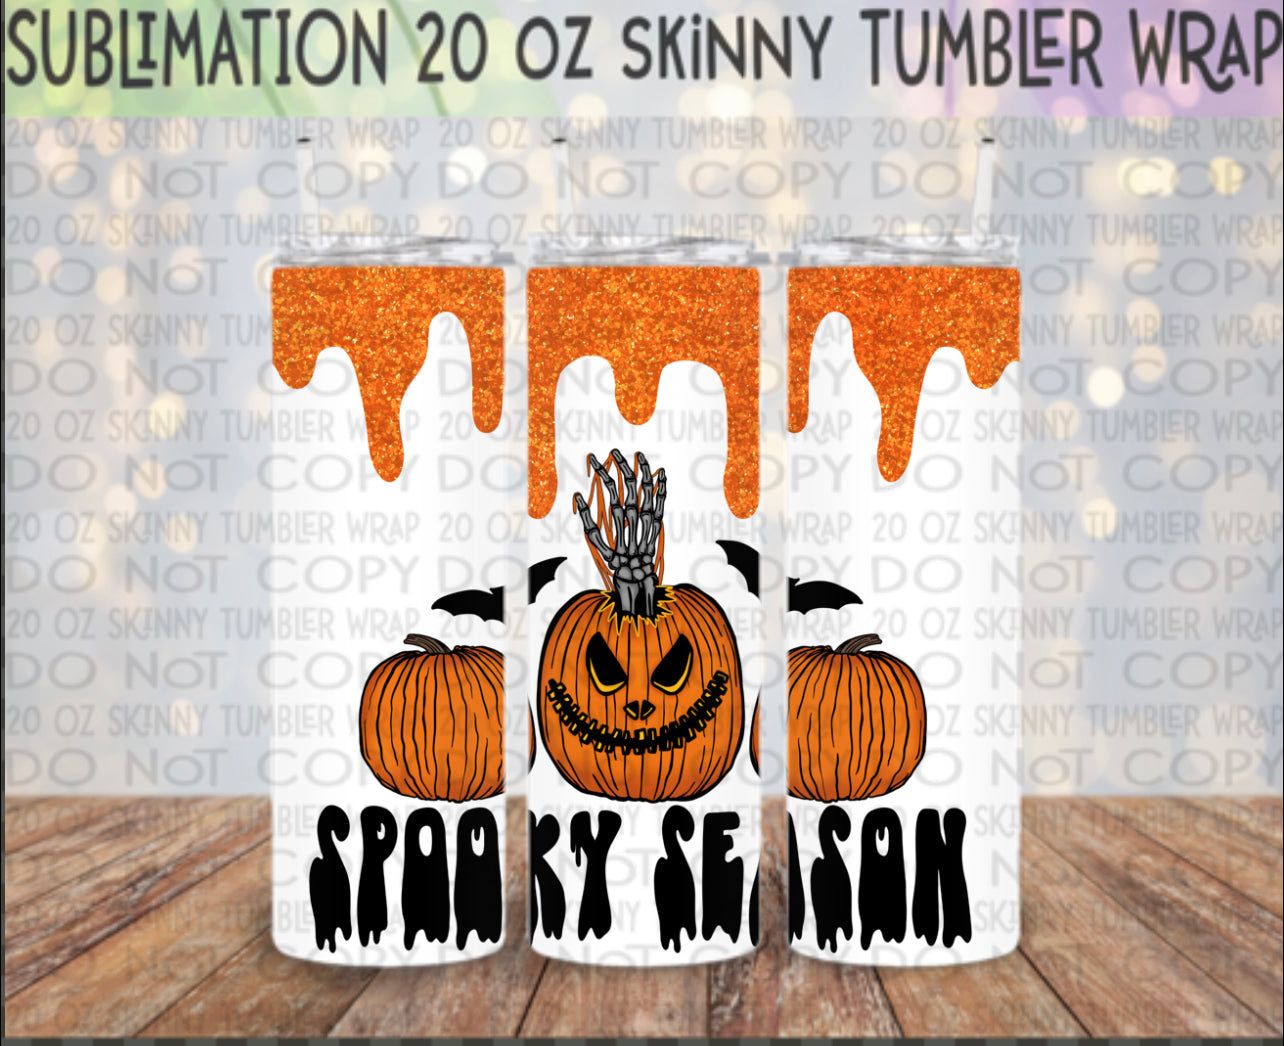 Spooky Season 20 Oz Skinny Tumbler Wrap - Sublimation Transfer - RTS